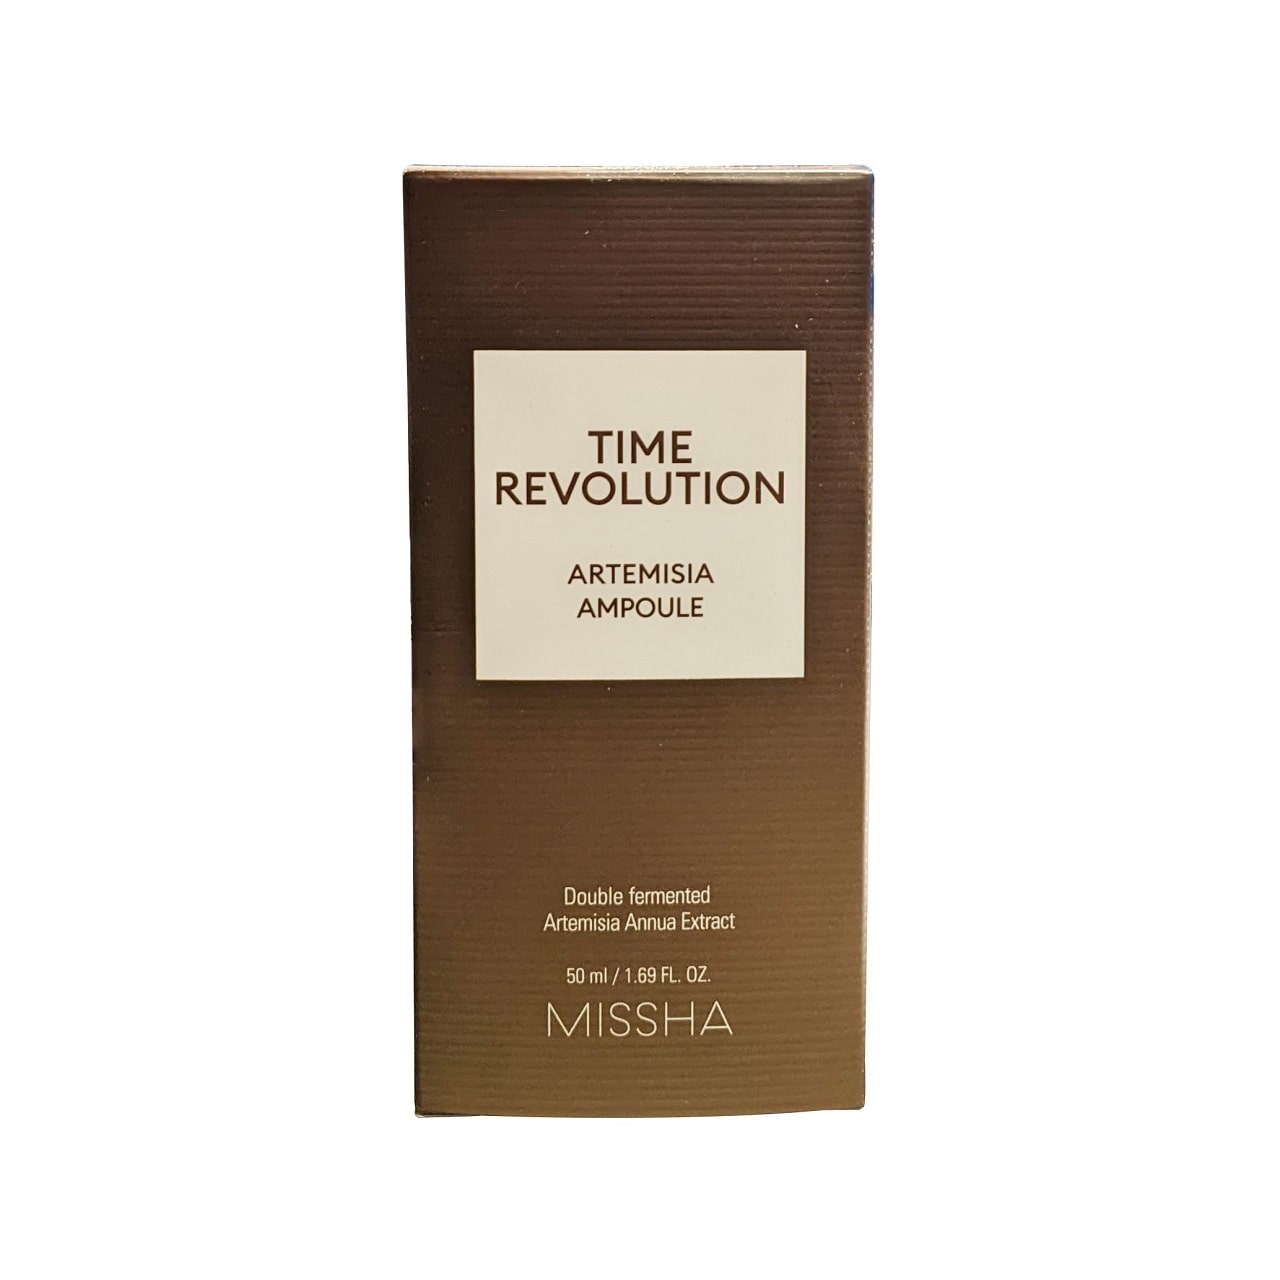 Product label for MISSHA Time Revolution Artemisia Ampoule (50 mL)